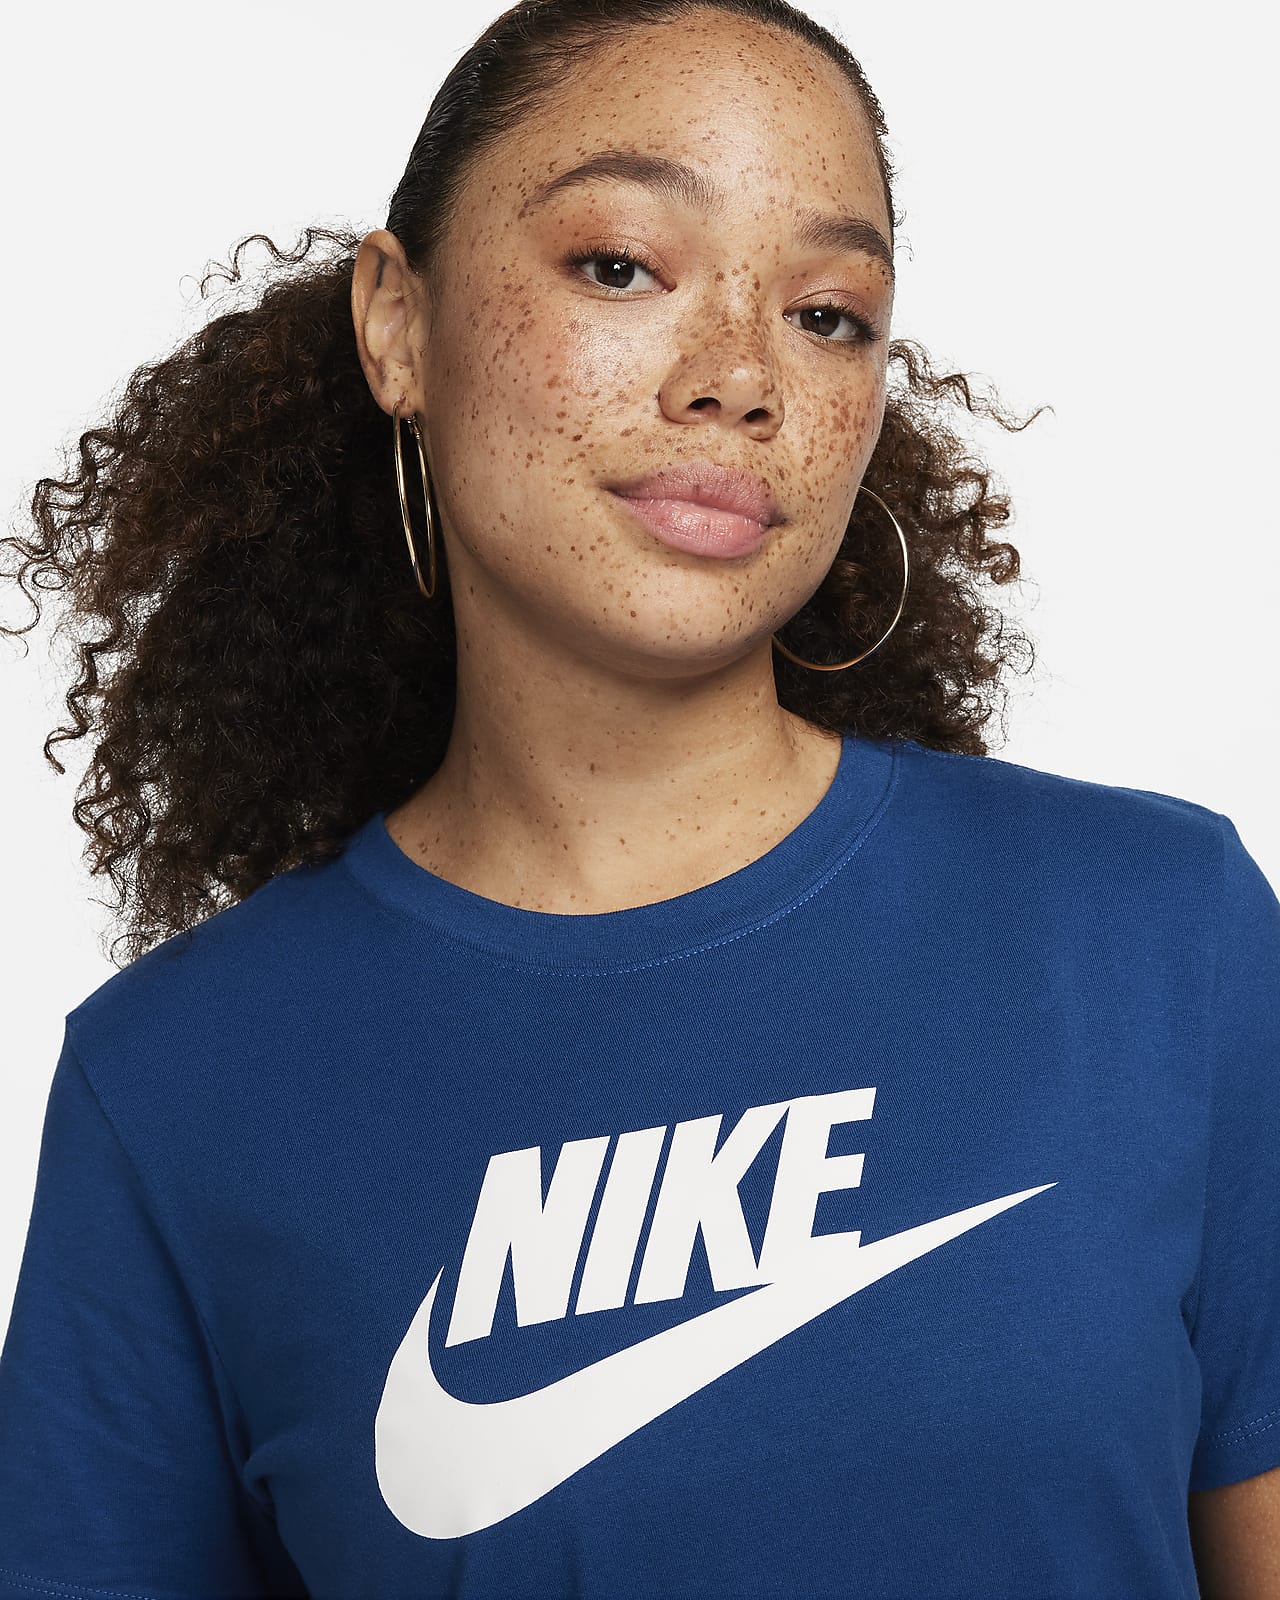 Nike Sportswear Essential Women's Logo Short-Sleeve Top. Nike ZA